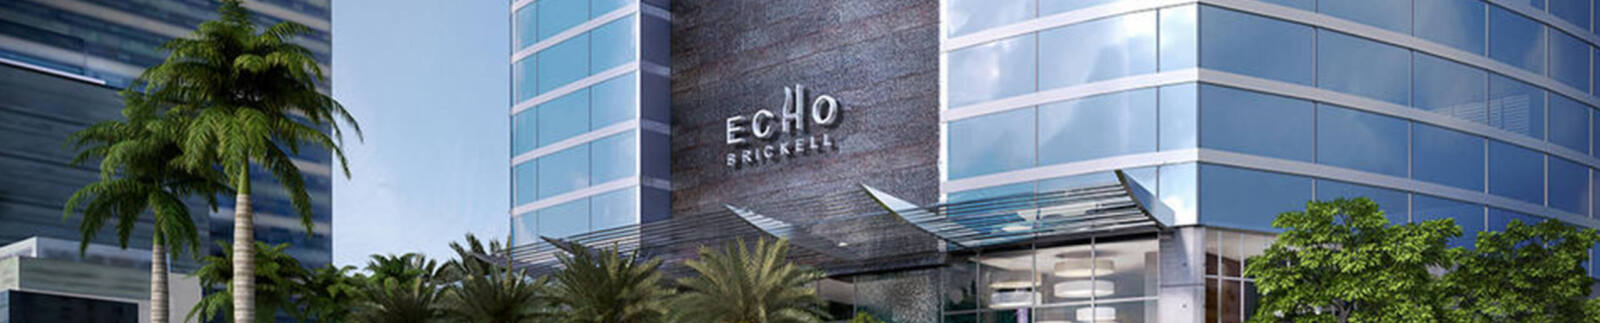 Echo Brickell Fire Sprinkler System Design